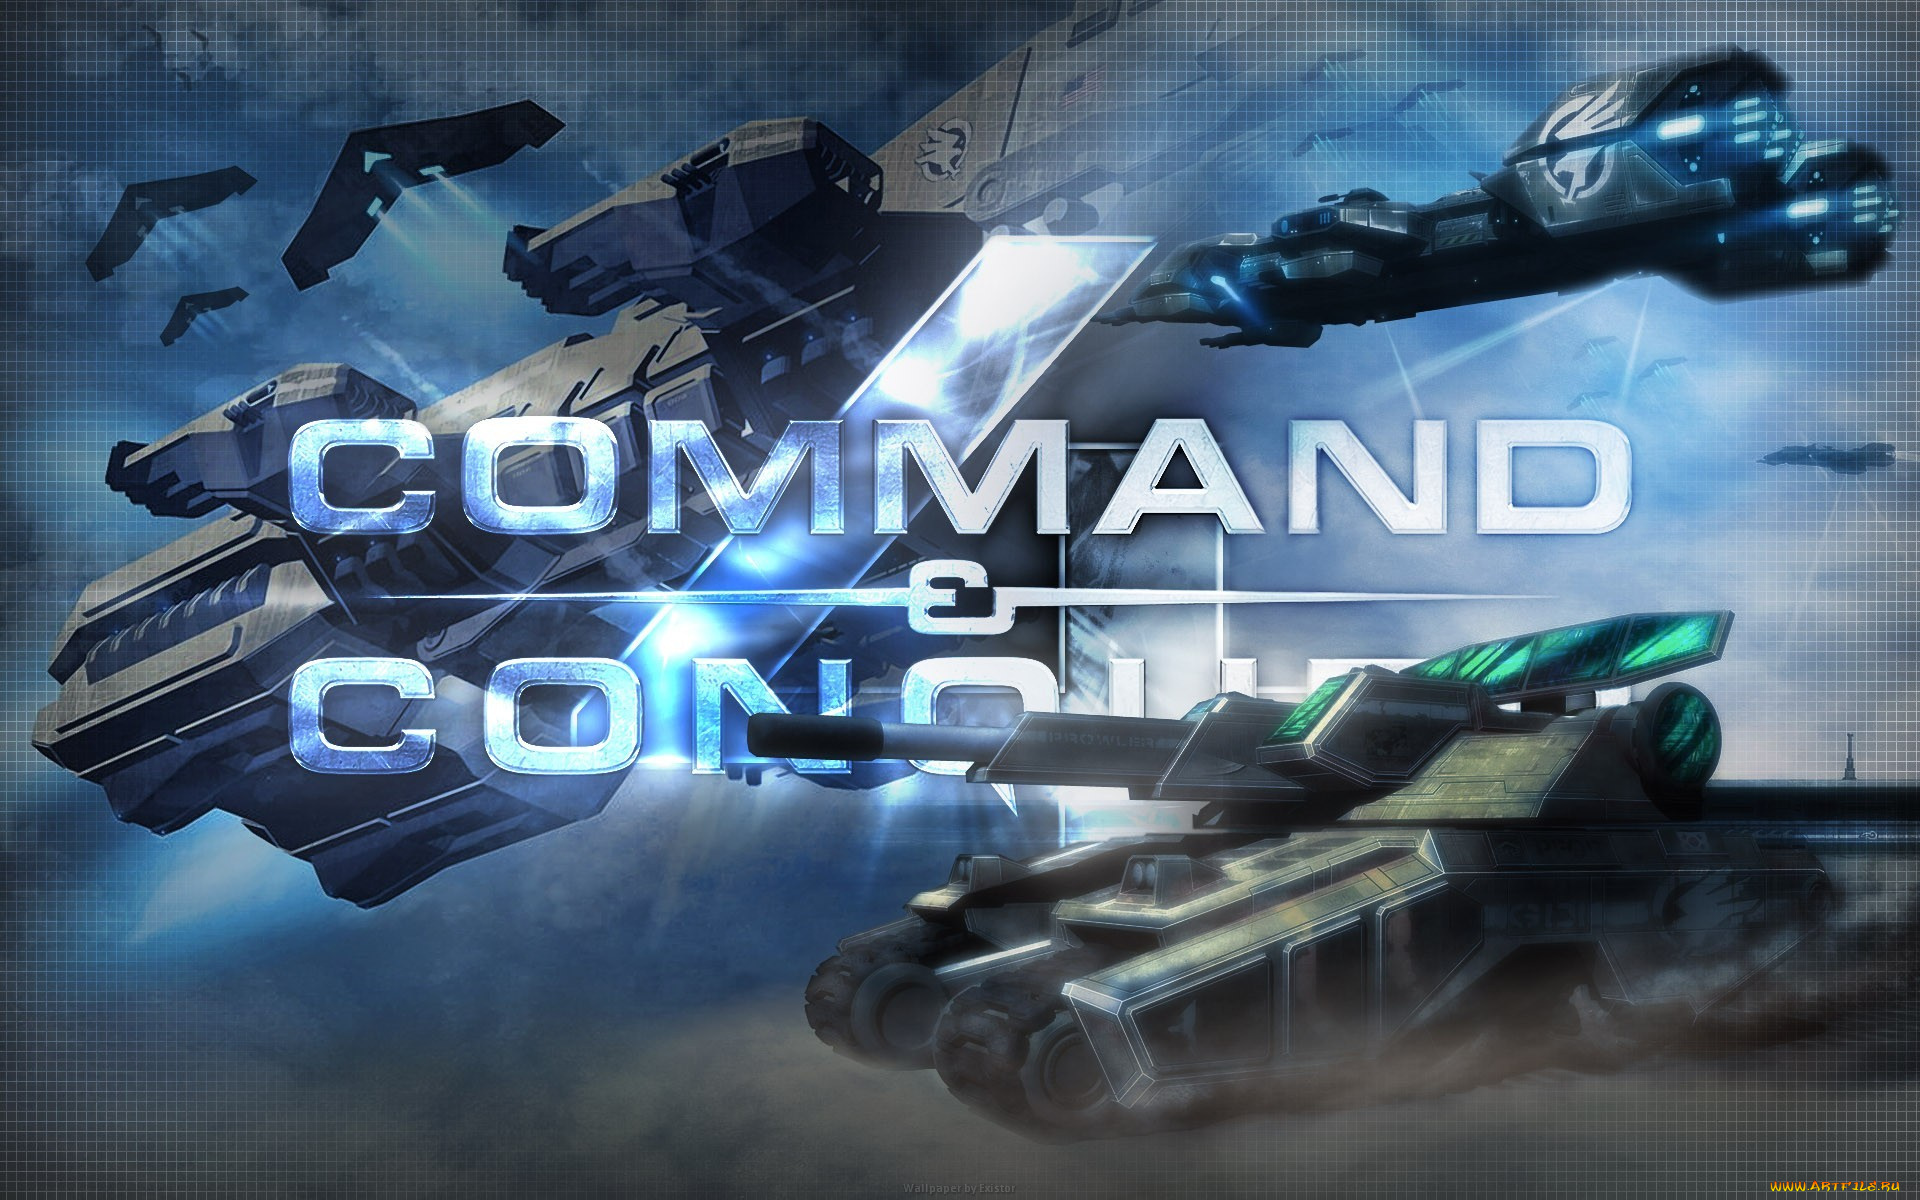 command, conquer, видео, игры, tiberian, twilight